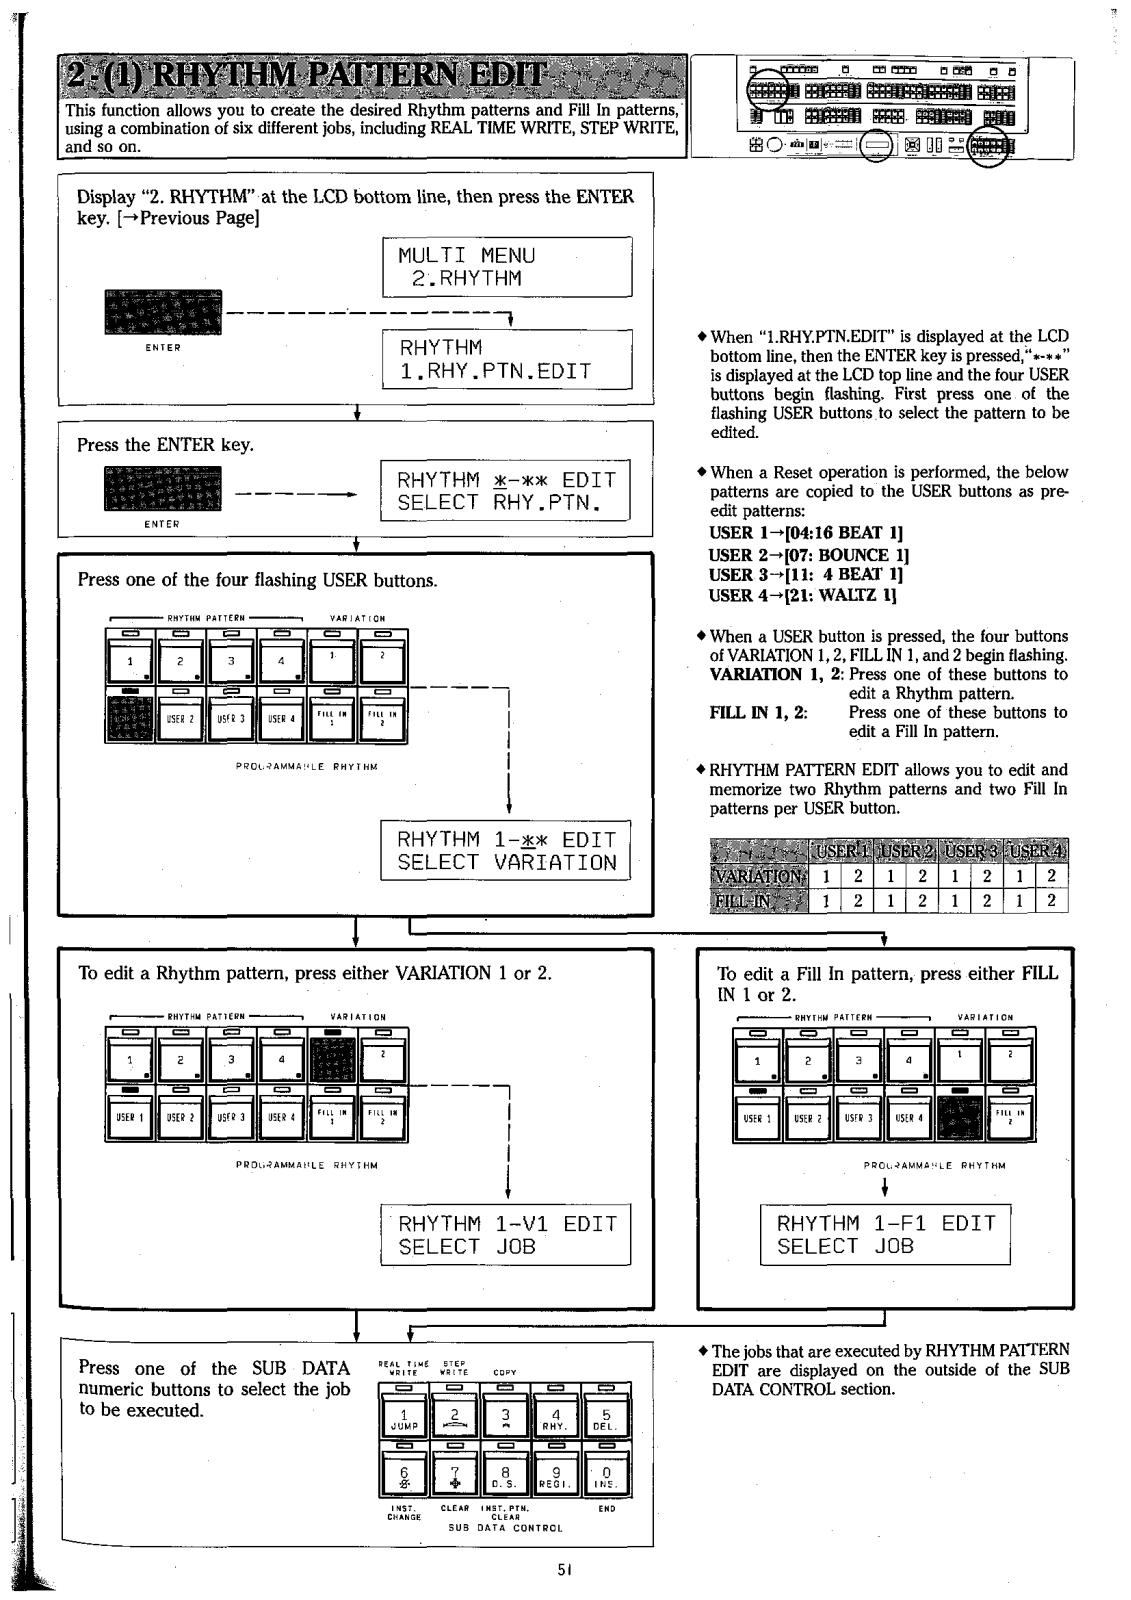 Yamaha CHX-1 Owner's Manual